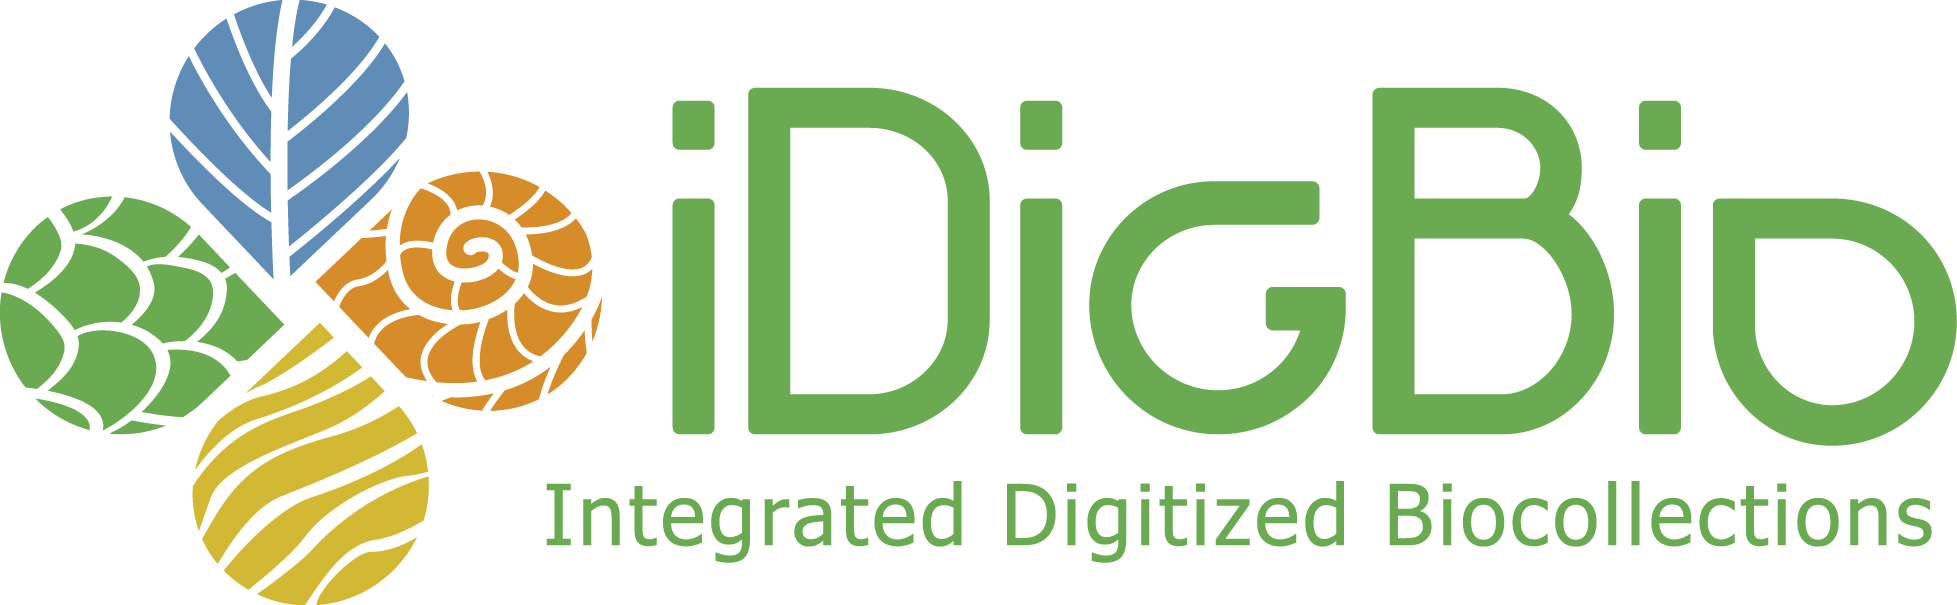 Integrated Digitized Biocollections (iDigBio) logo